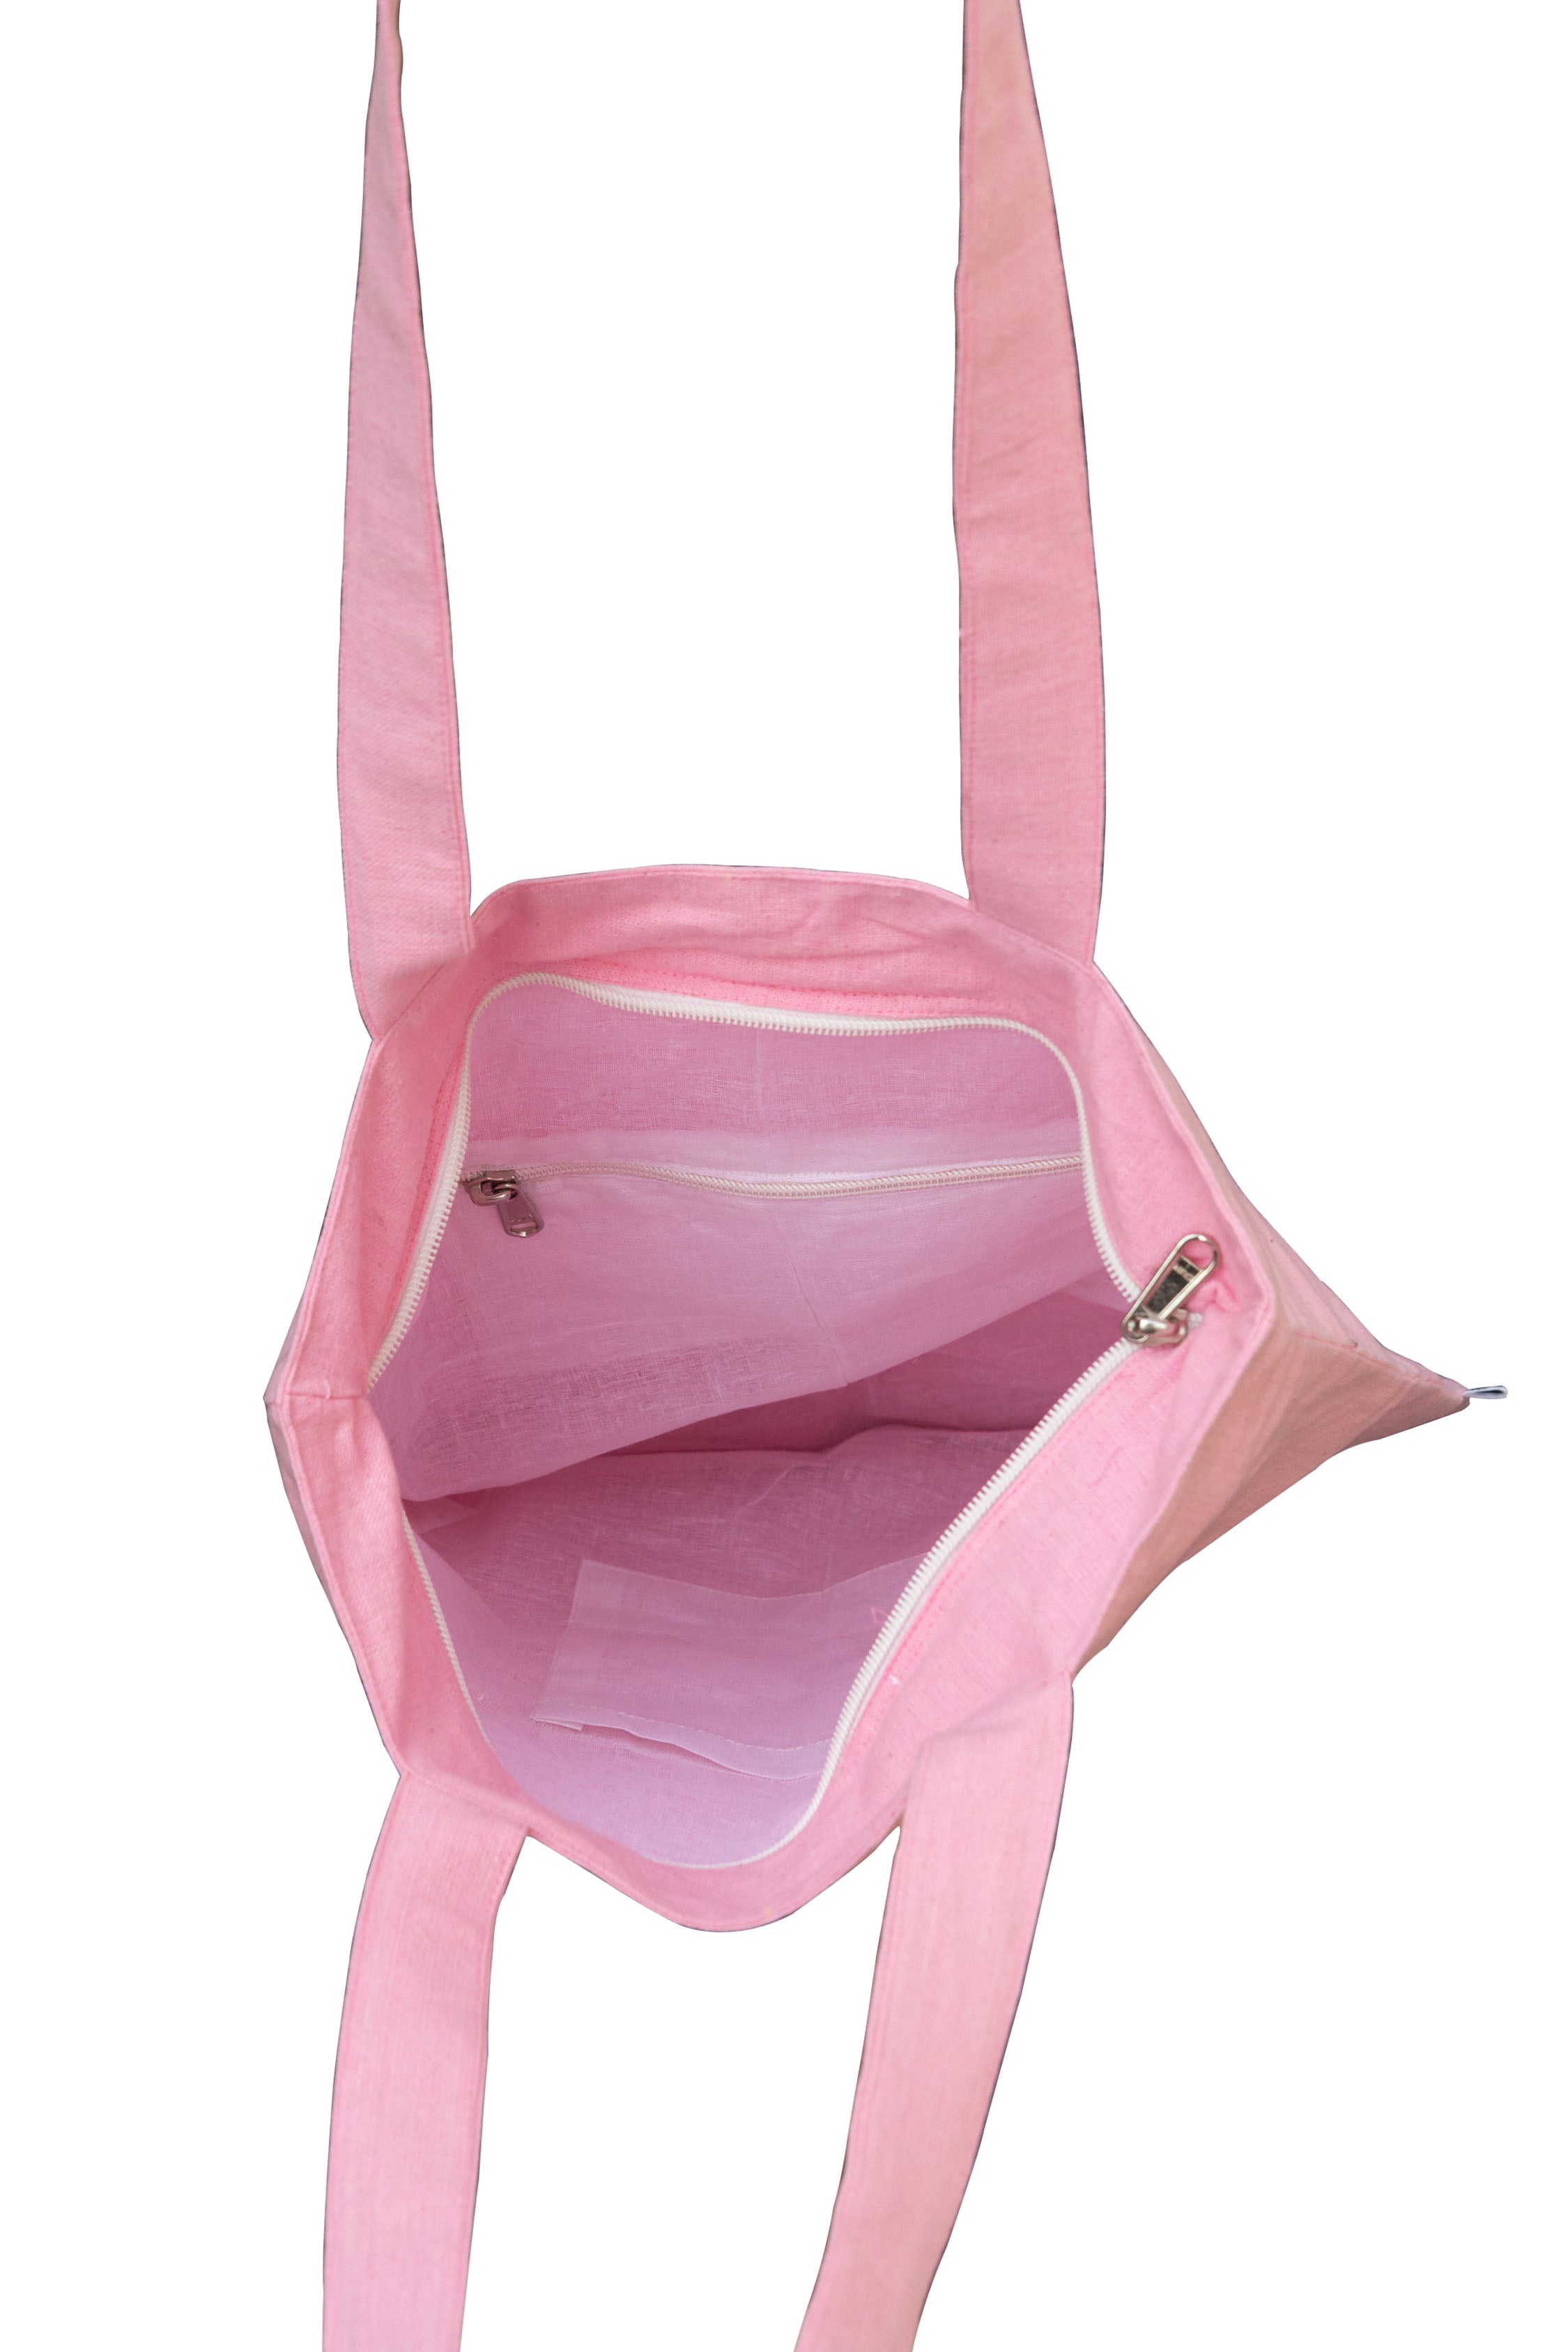 Sunday Pink Cotton Tote Bag